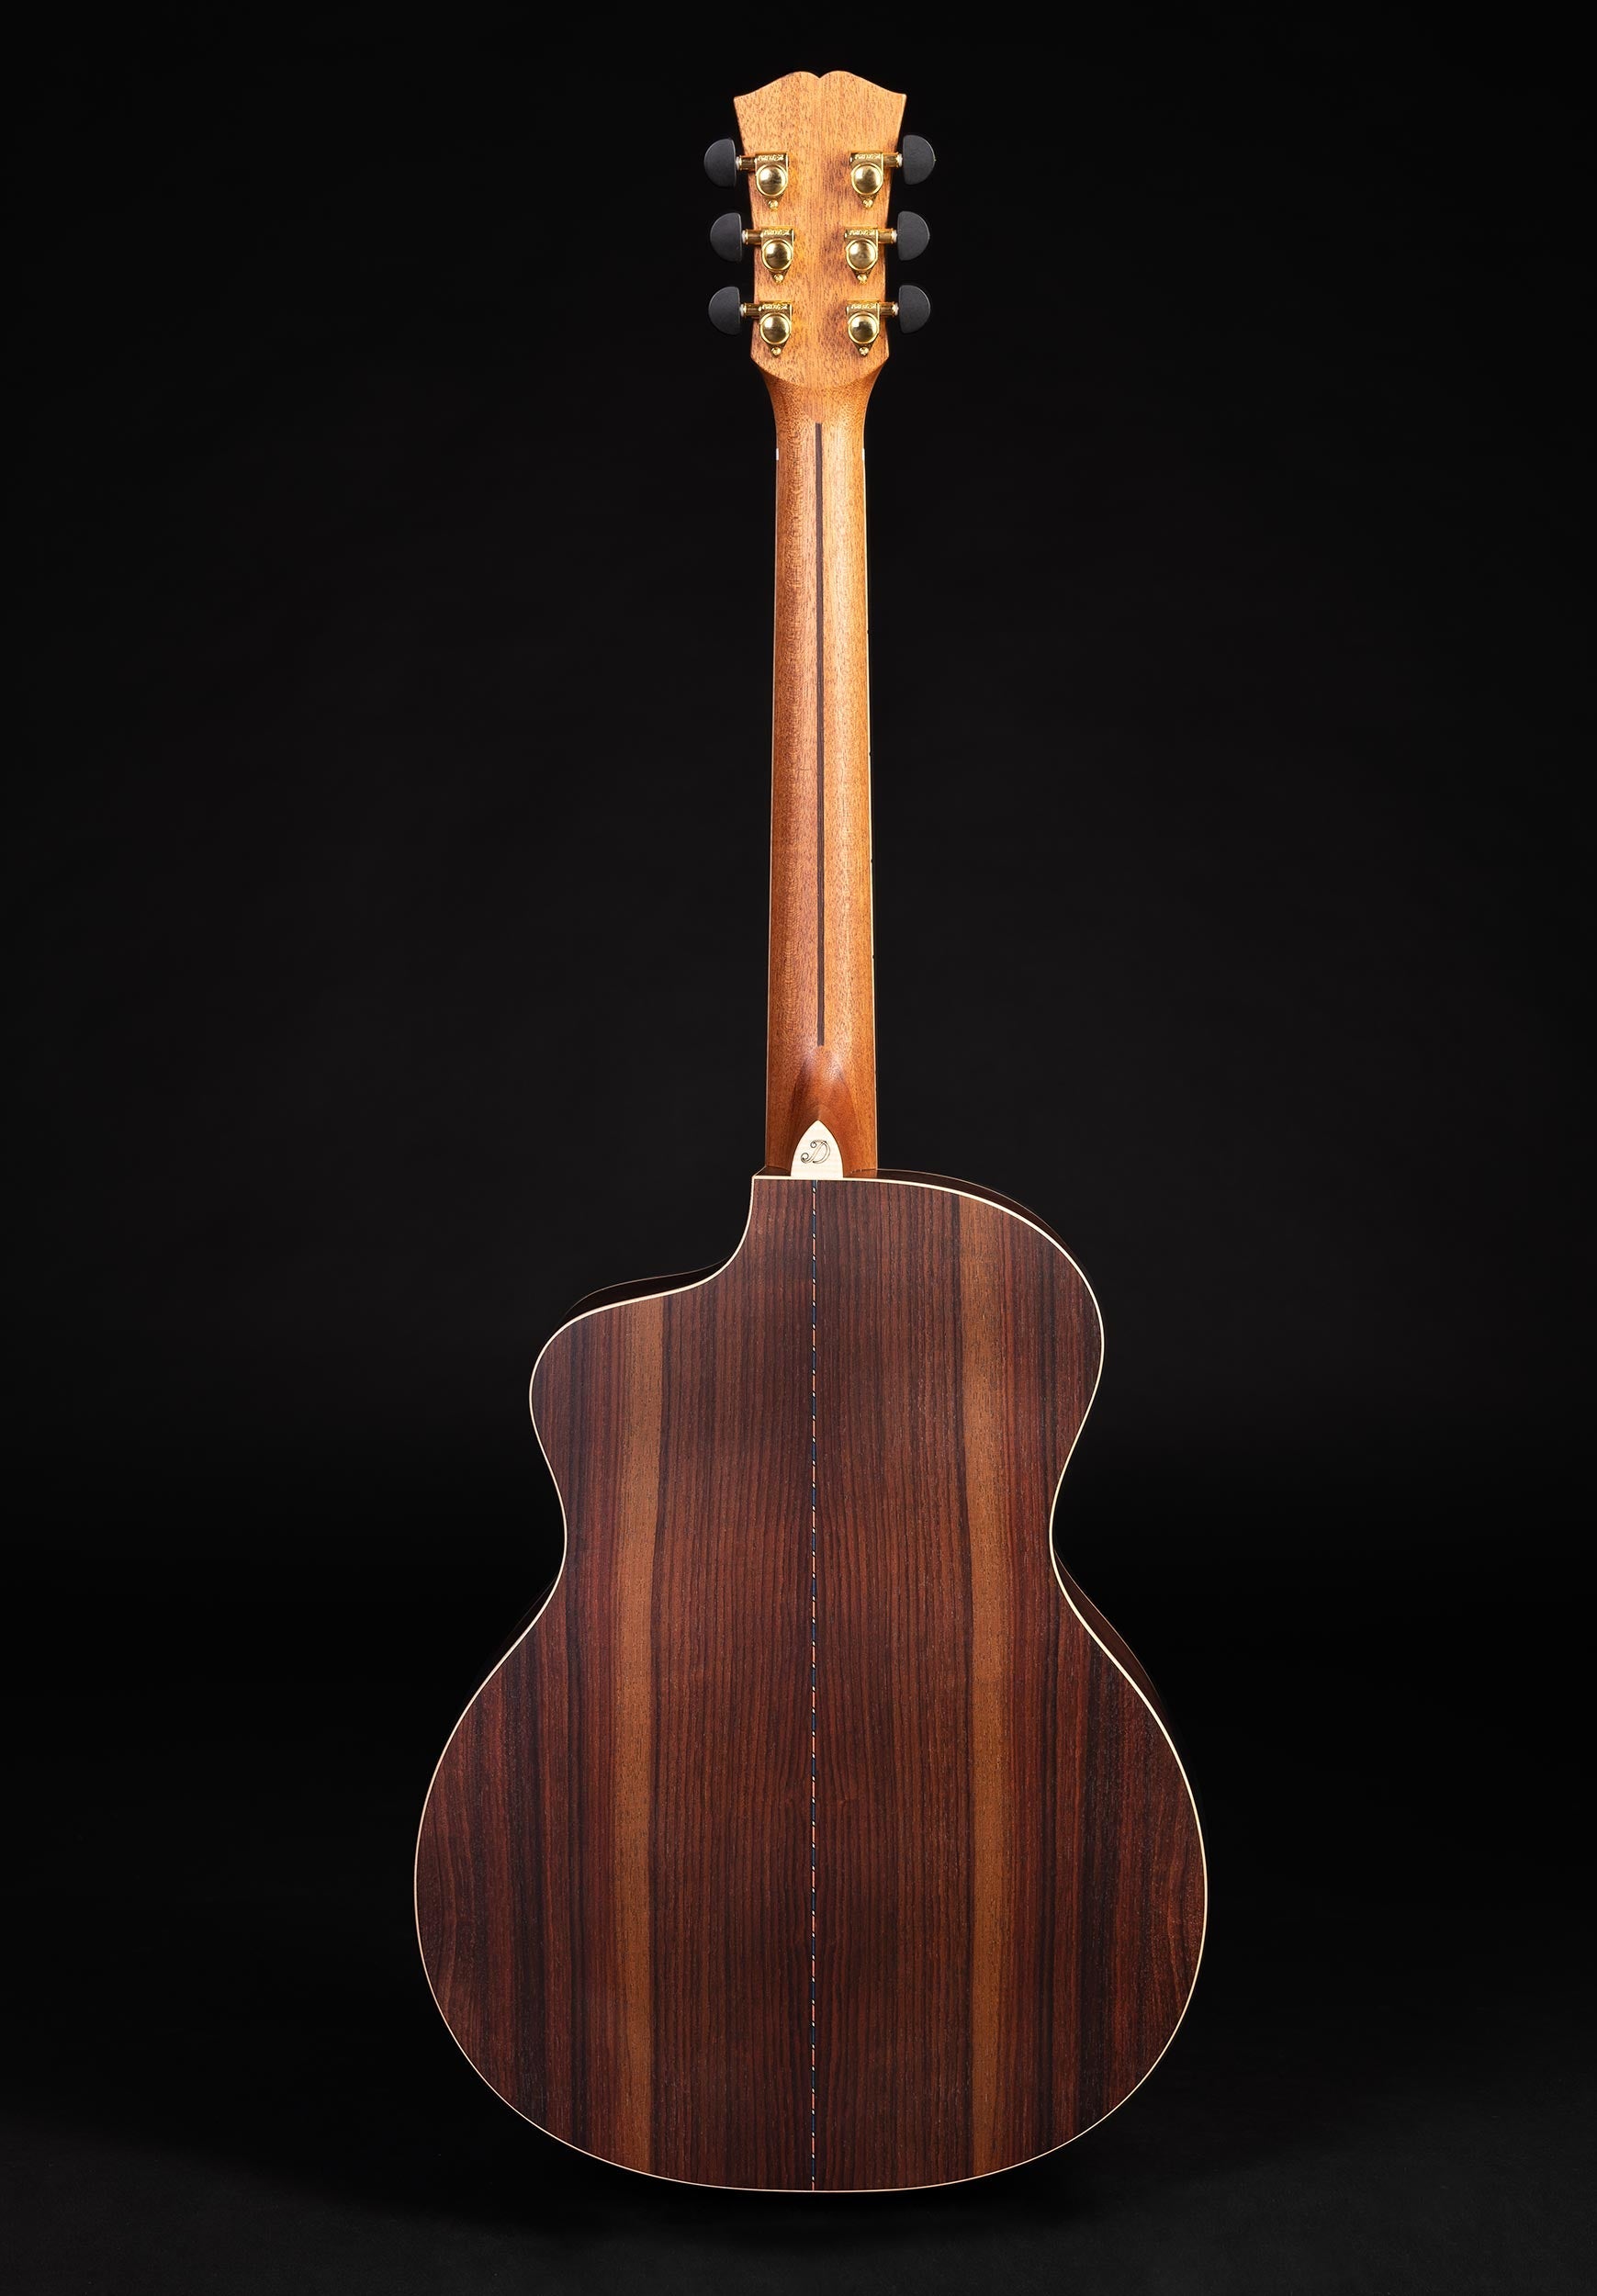 Dowina Rosewood (Ceres) GA, Acoustic Guitar for sale at Richards Guitars.